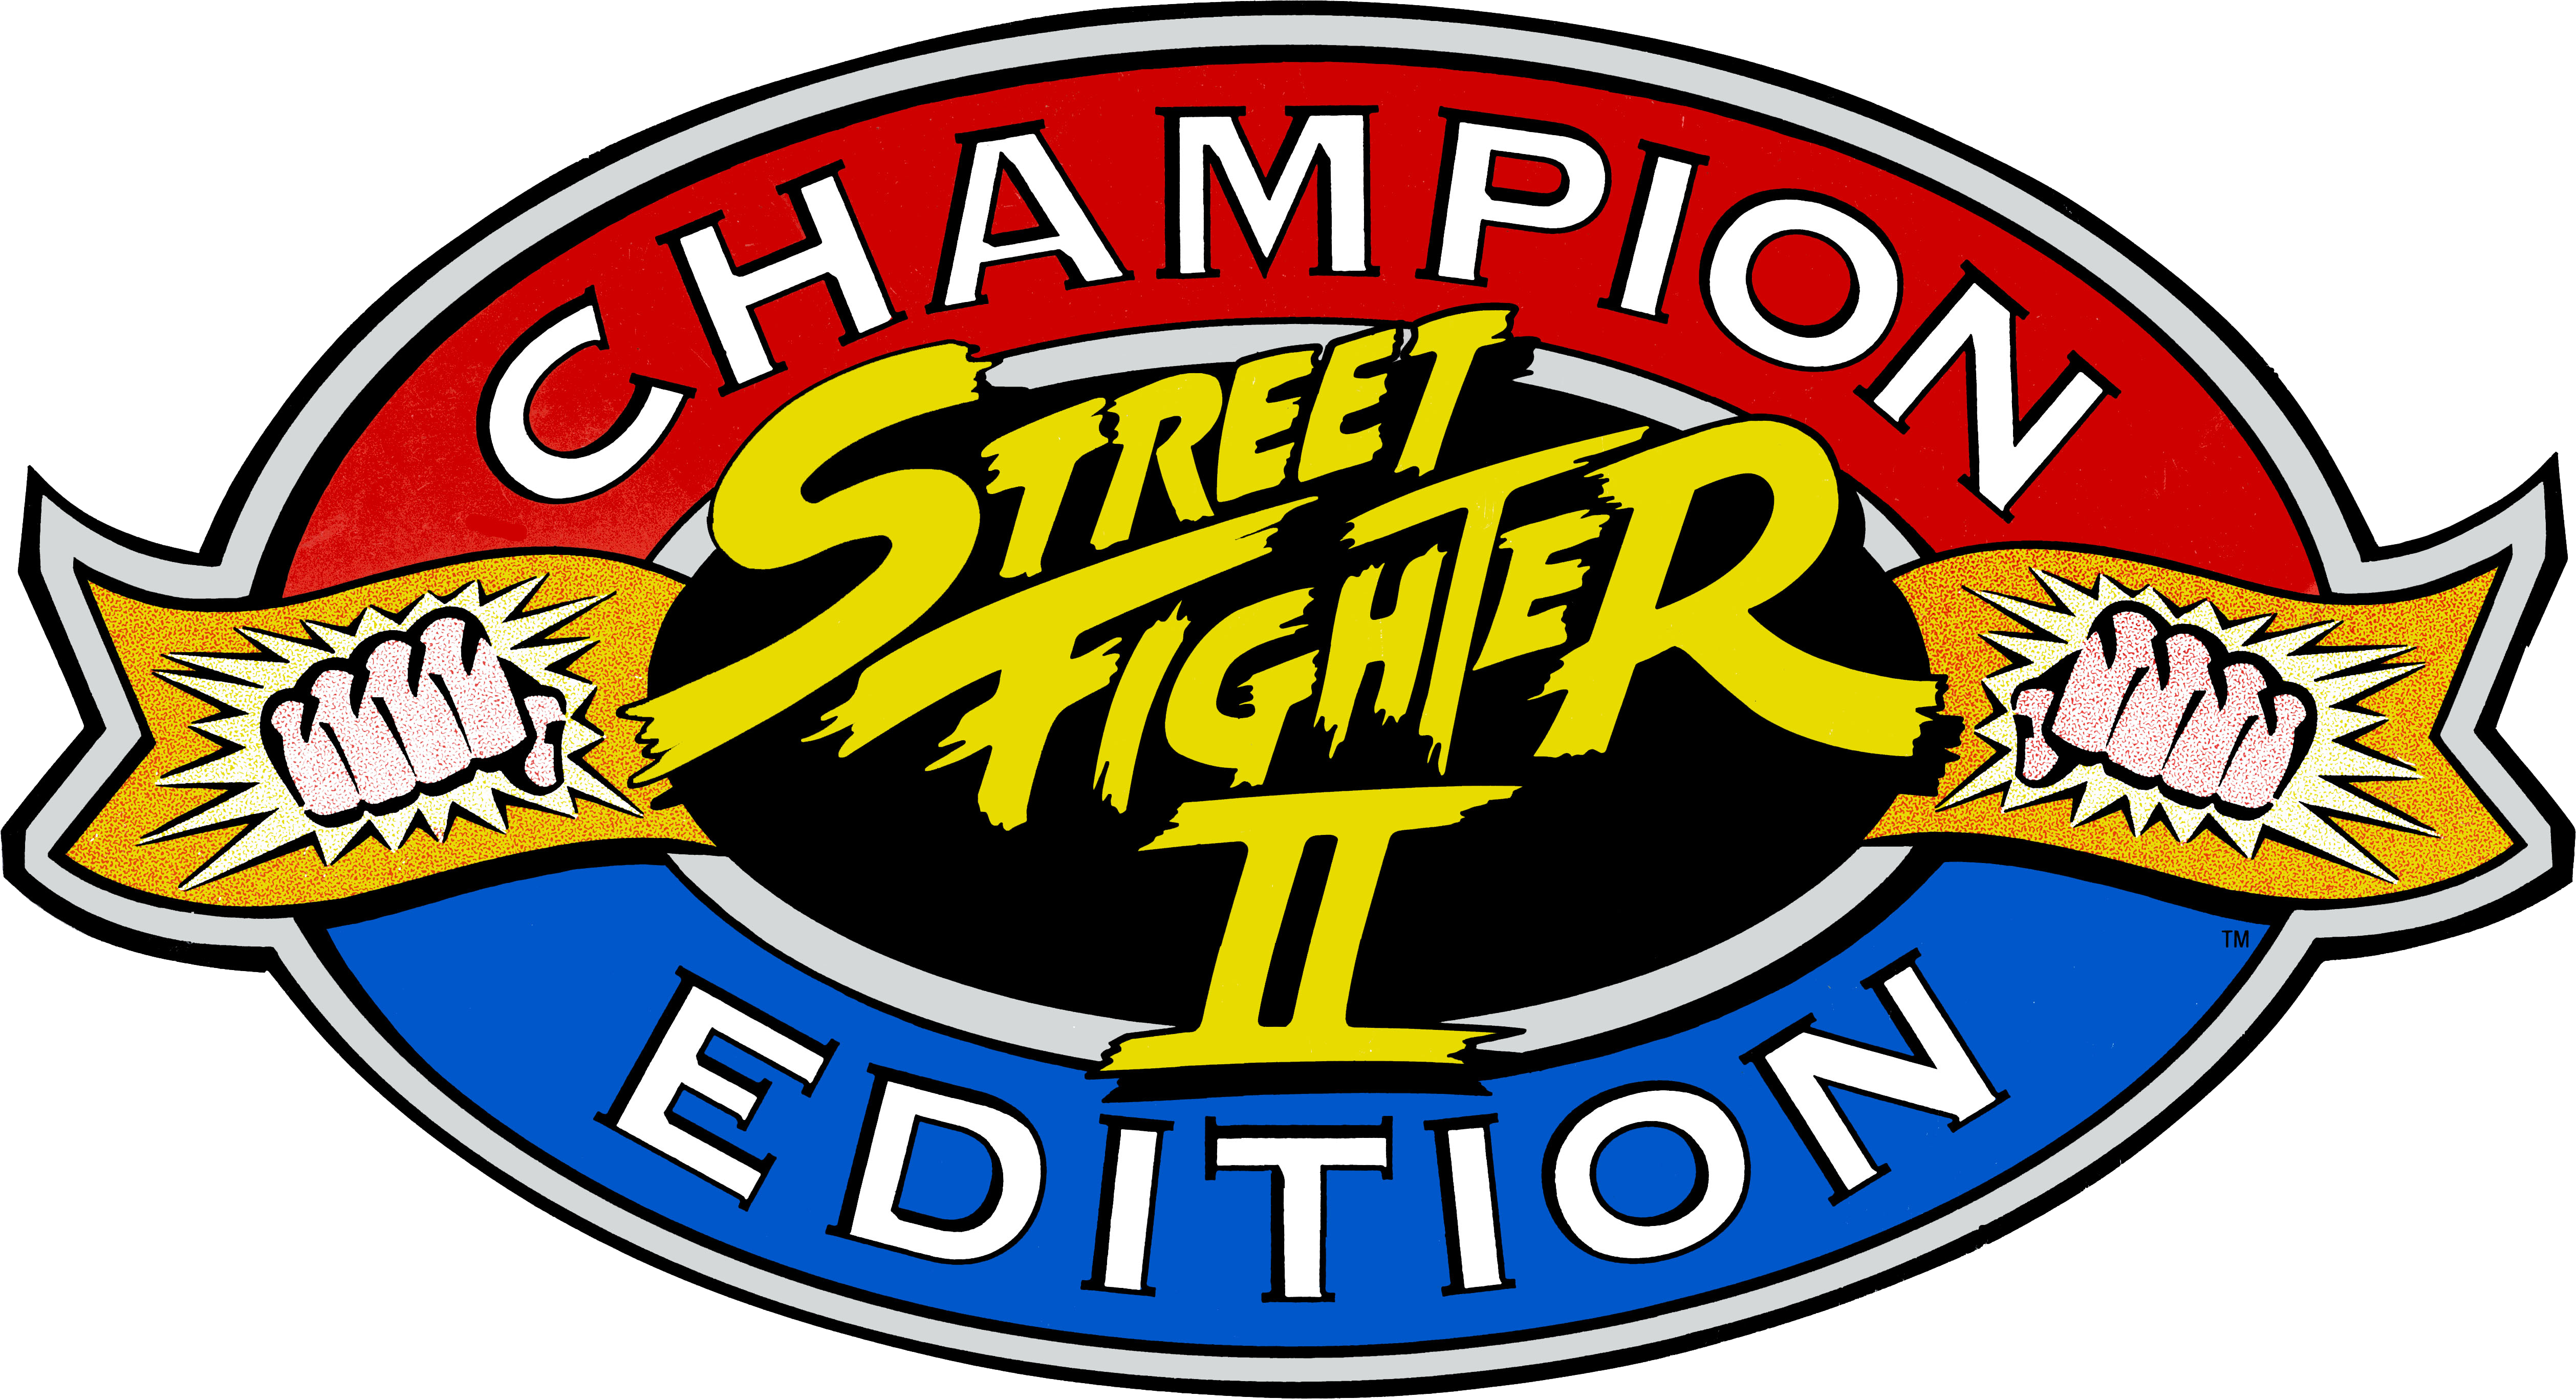 street fighter 2 champion edition